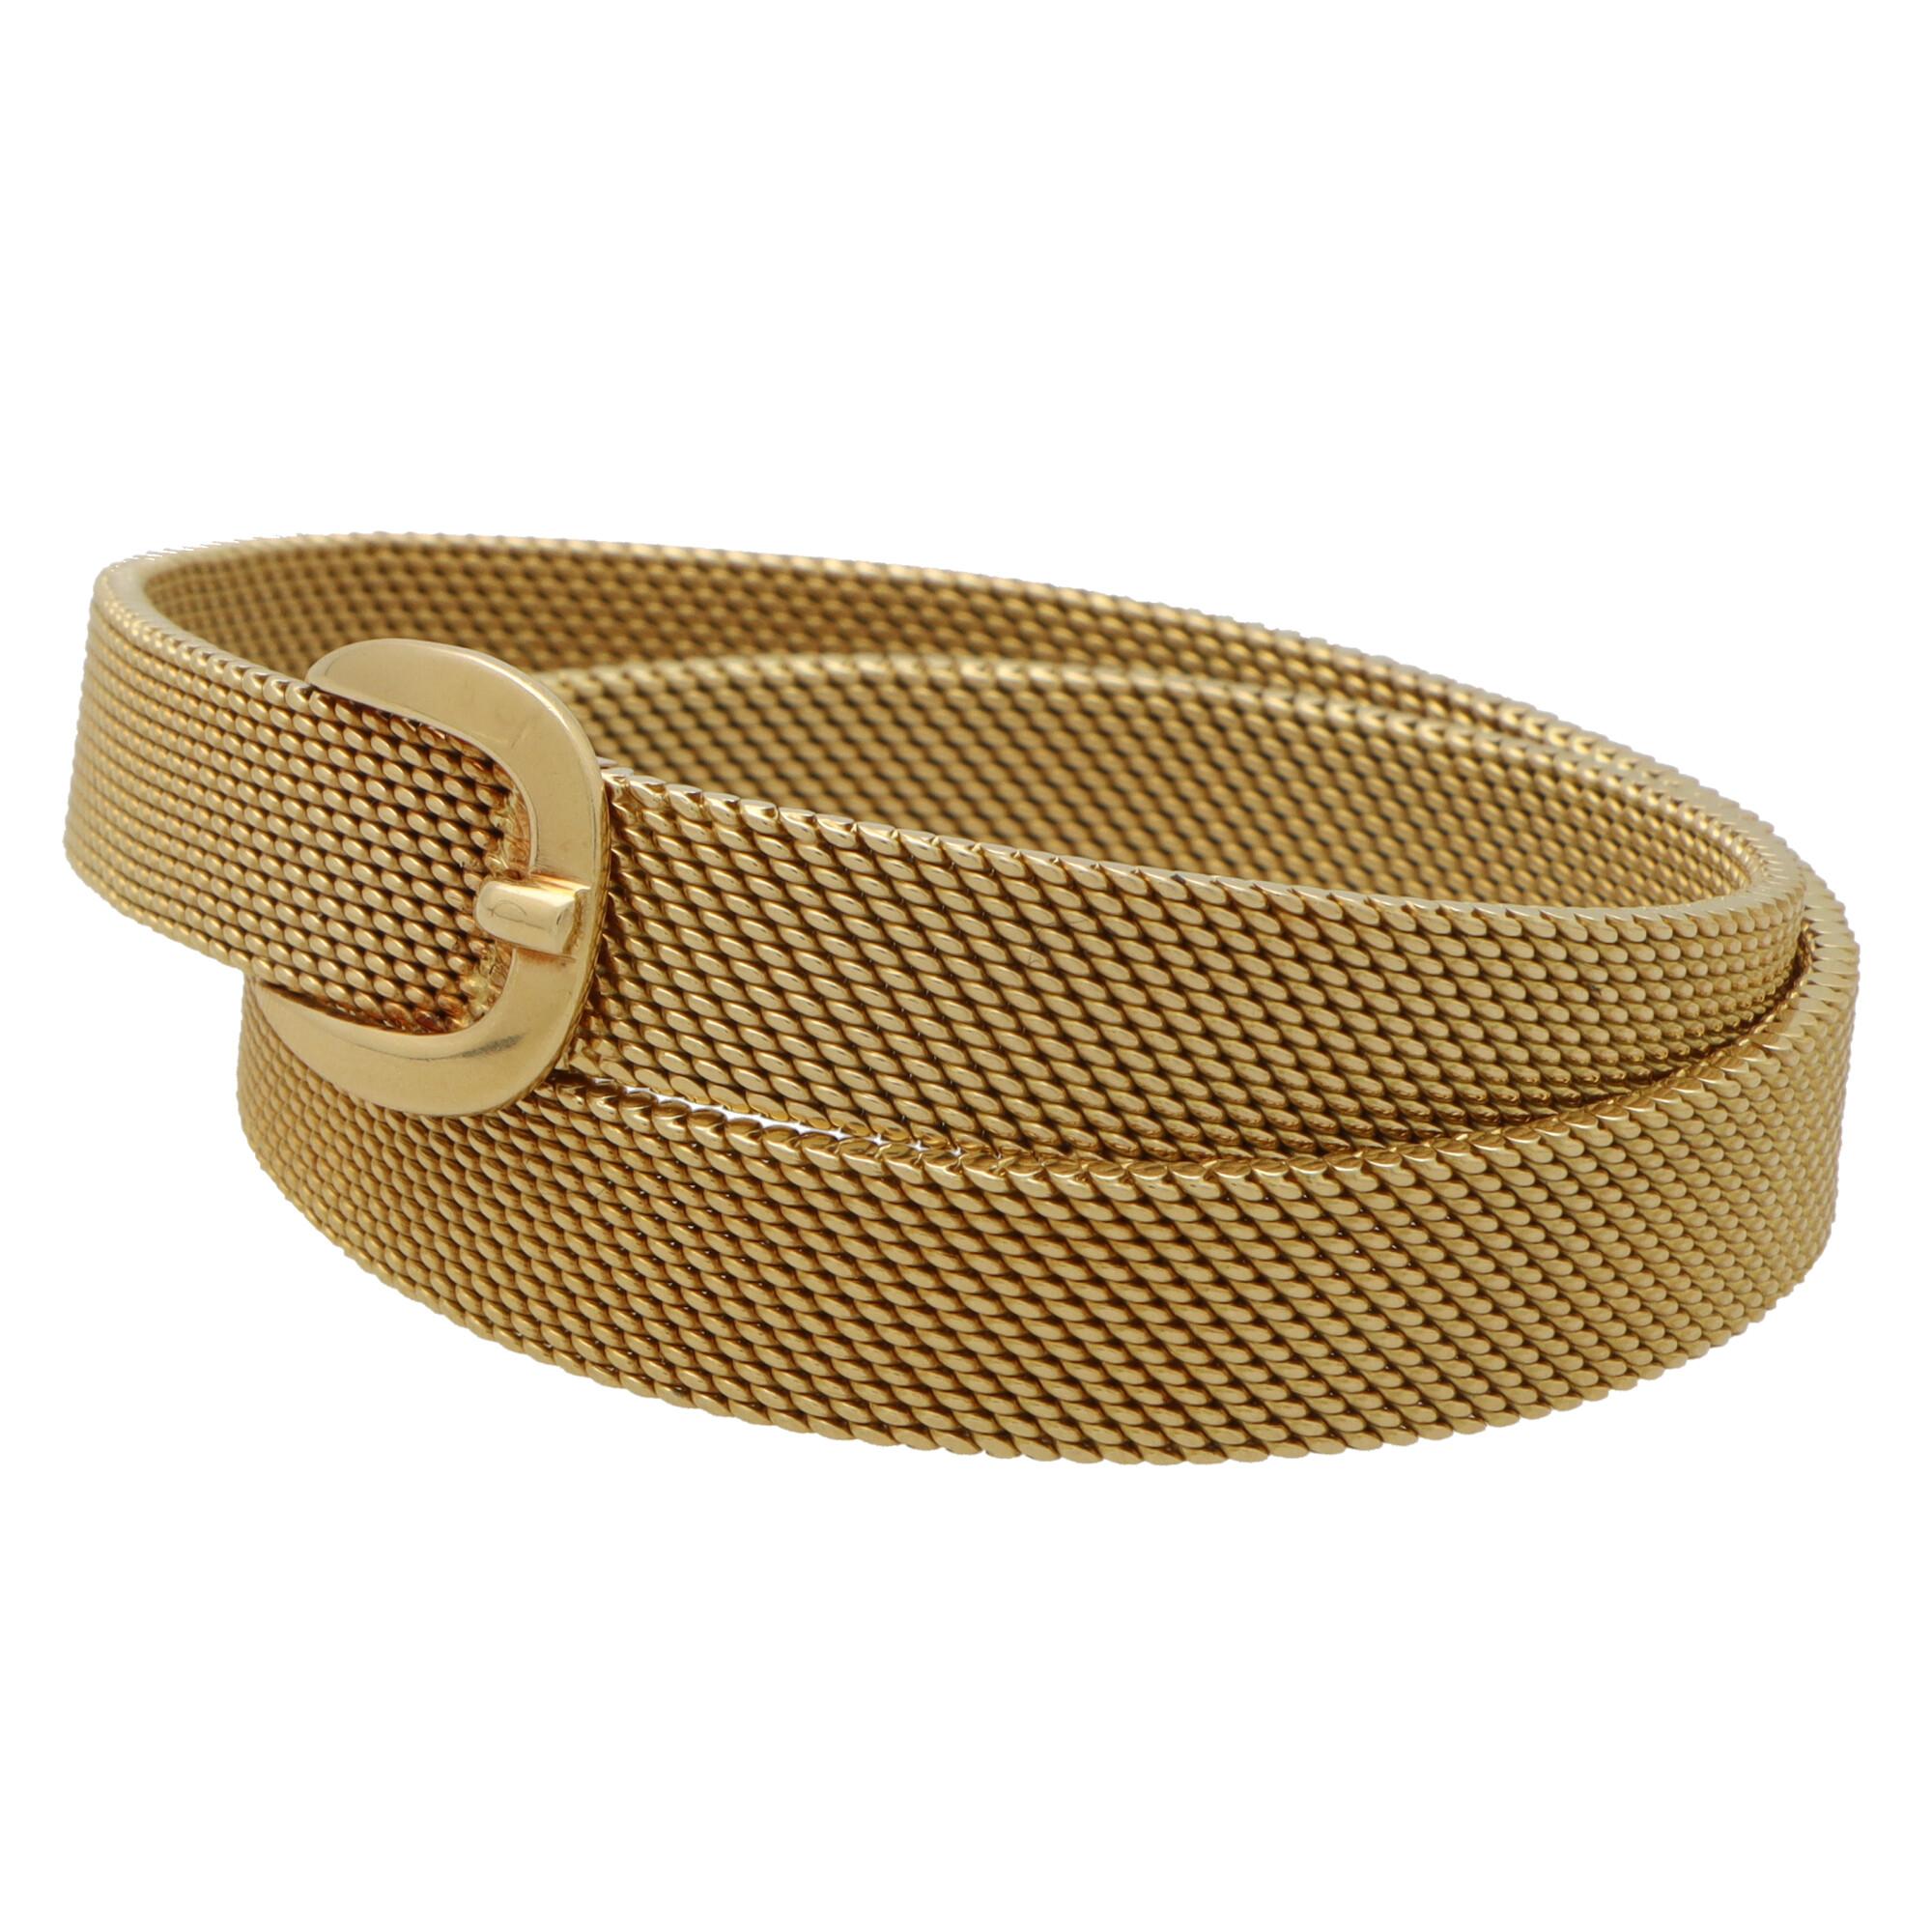 Retro Vintage Hermès Belt Buckle Wrap Bracelet Set in Solid 18k Yellow Gold For Sale